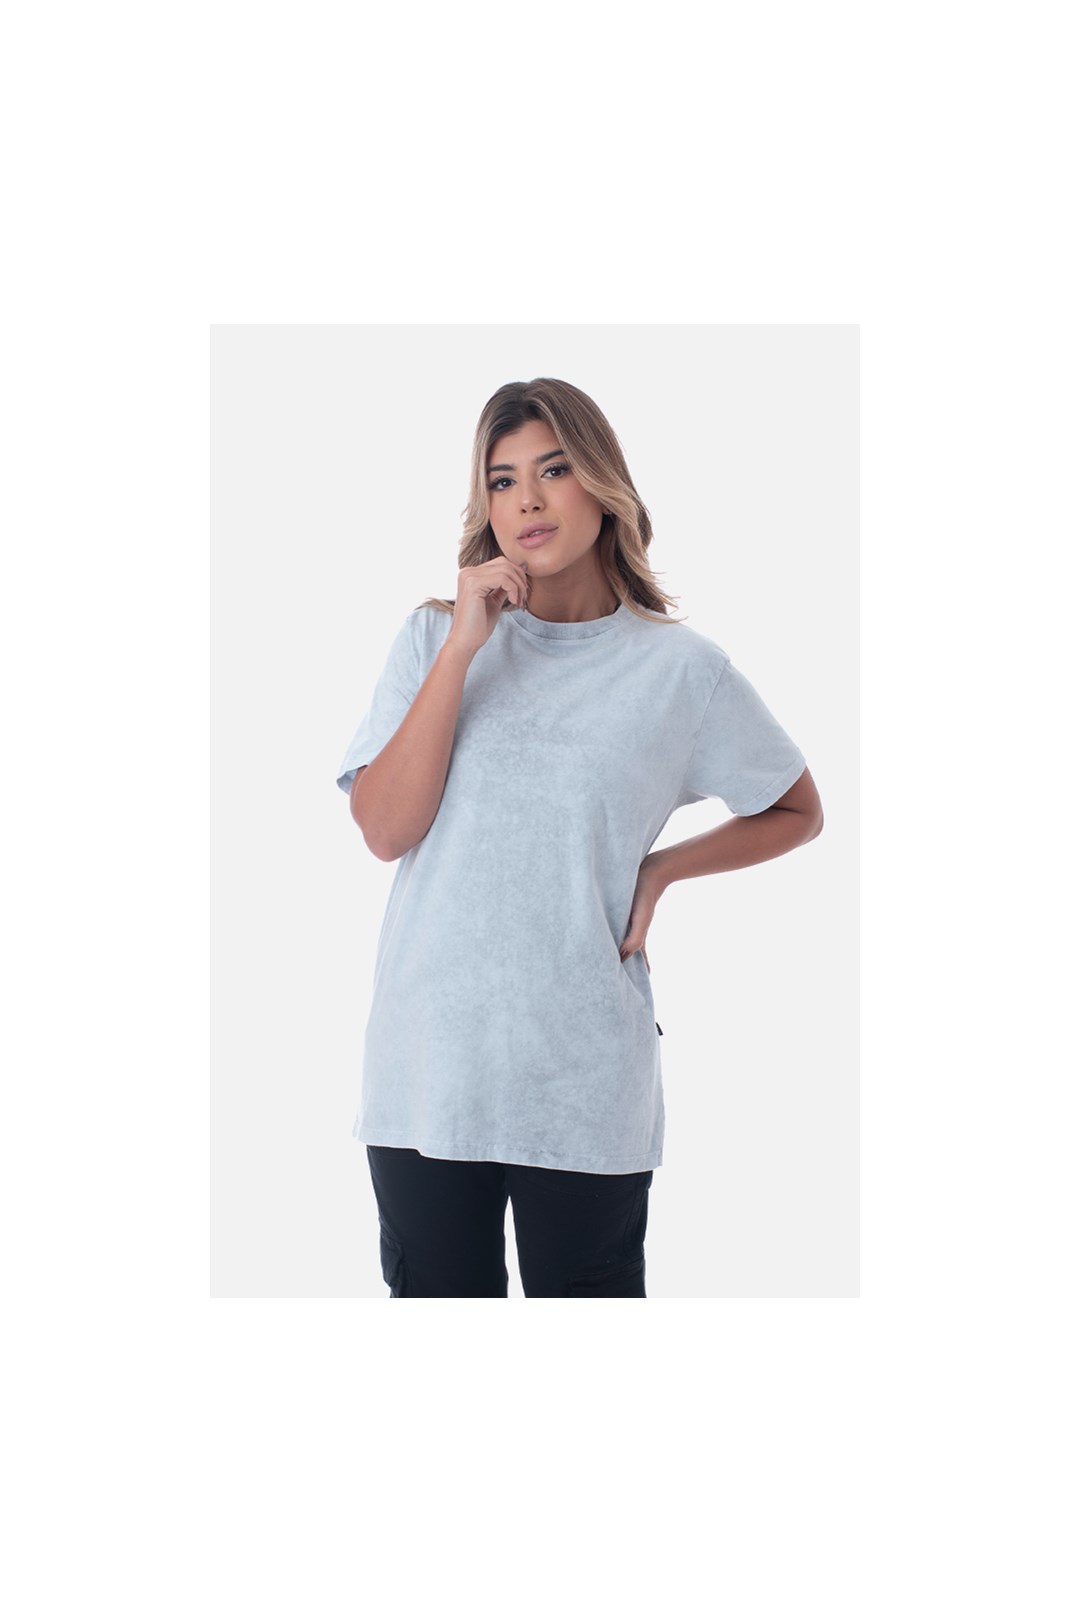 Camiseta Bold Approve Basic Cinza Marmorizada